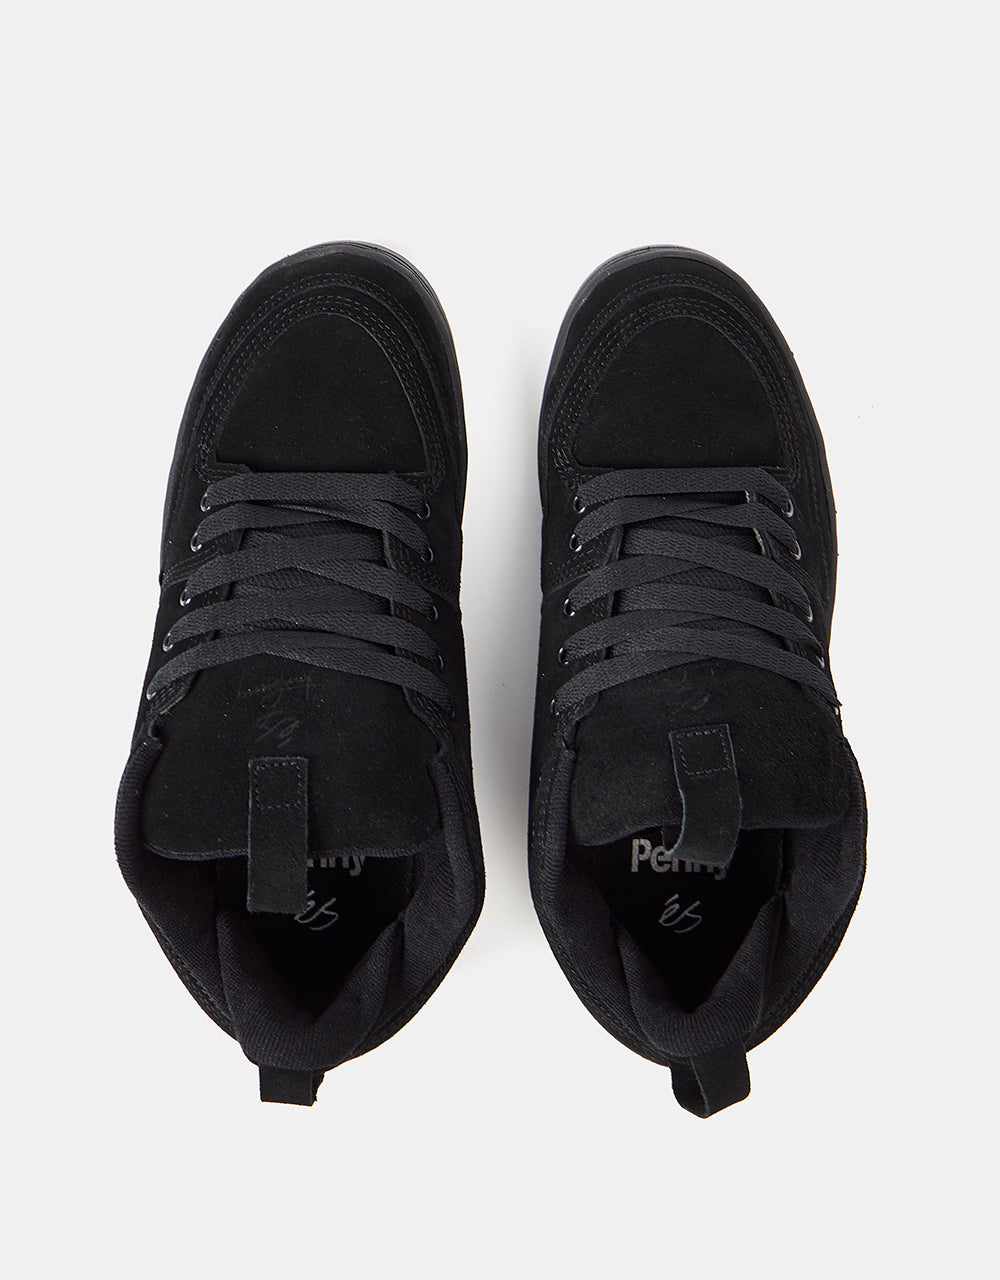 éS Penny 2 Skate Shoes - Black